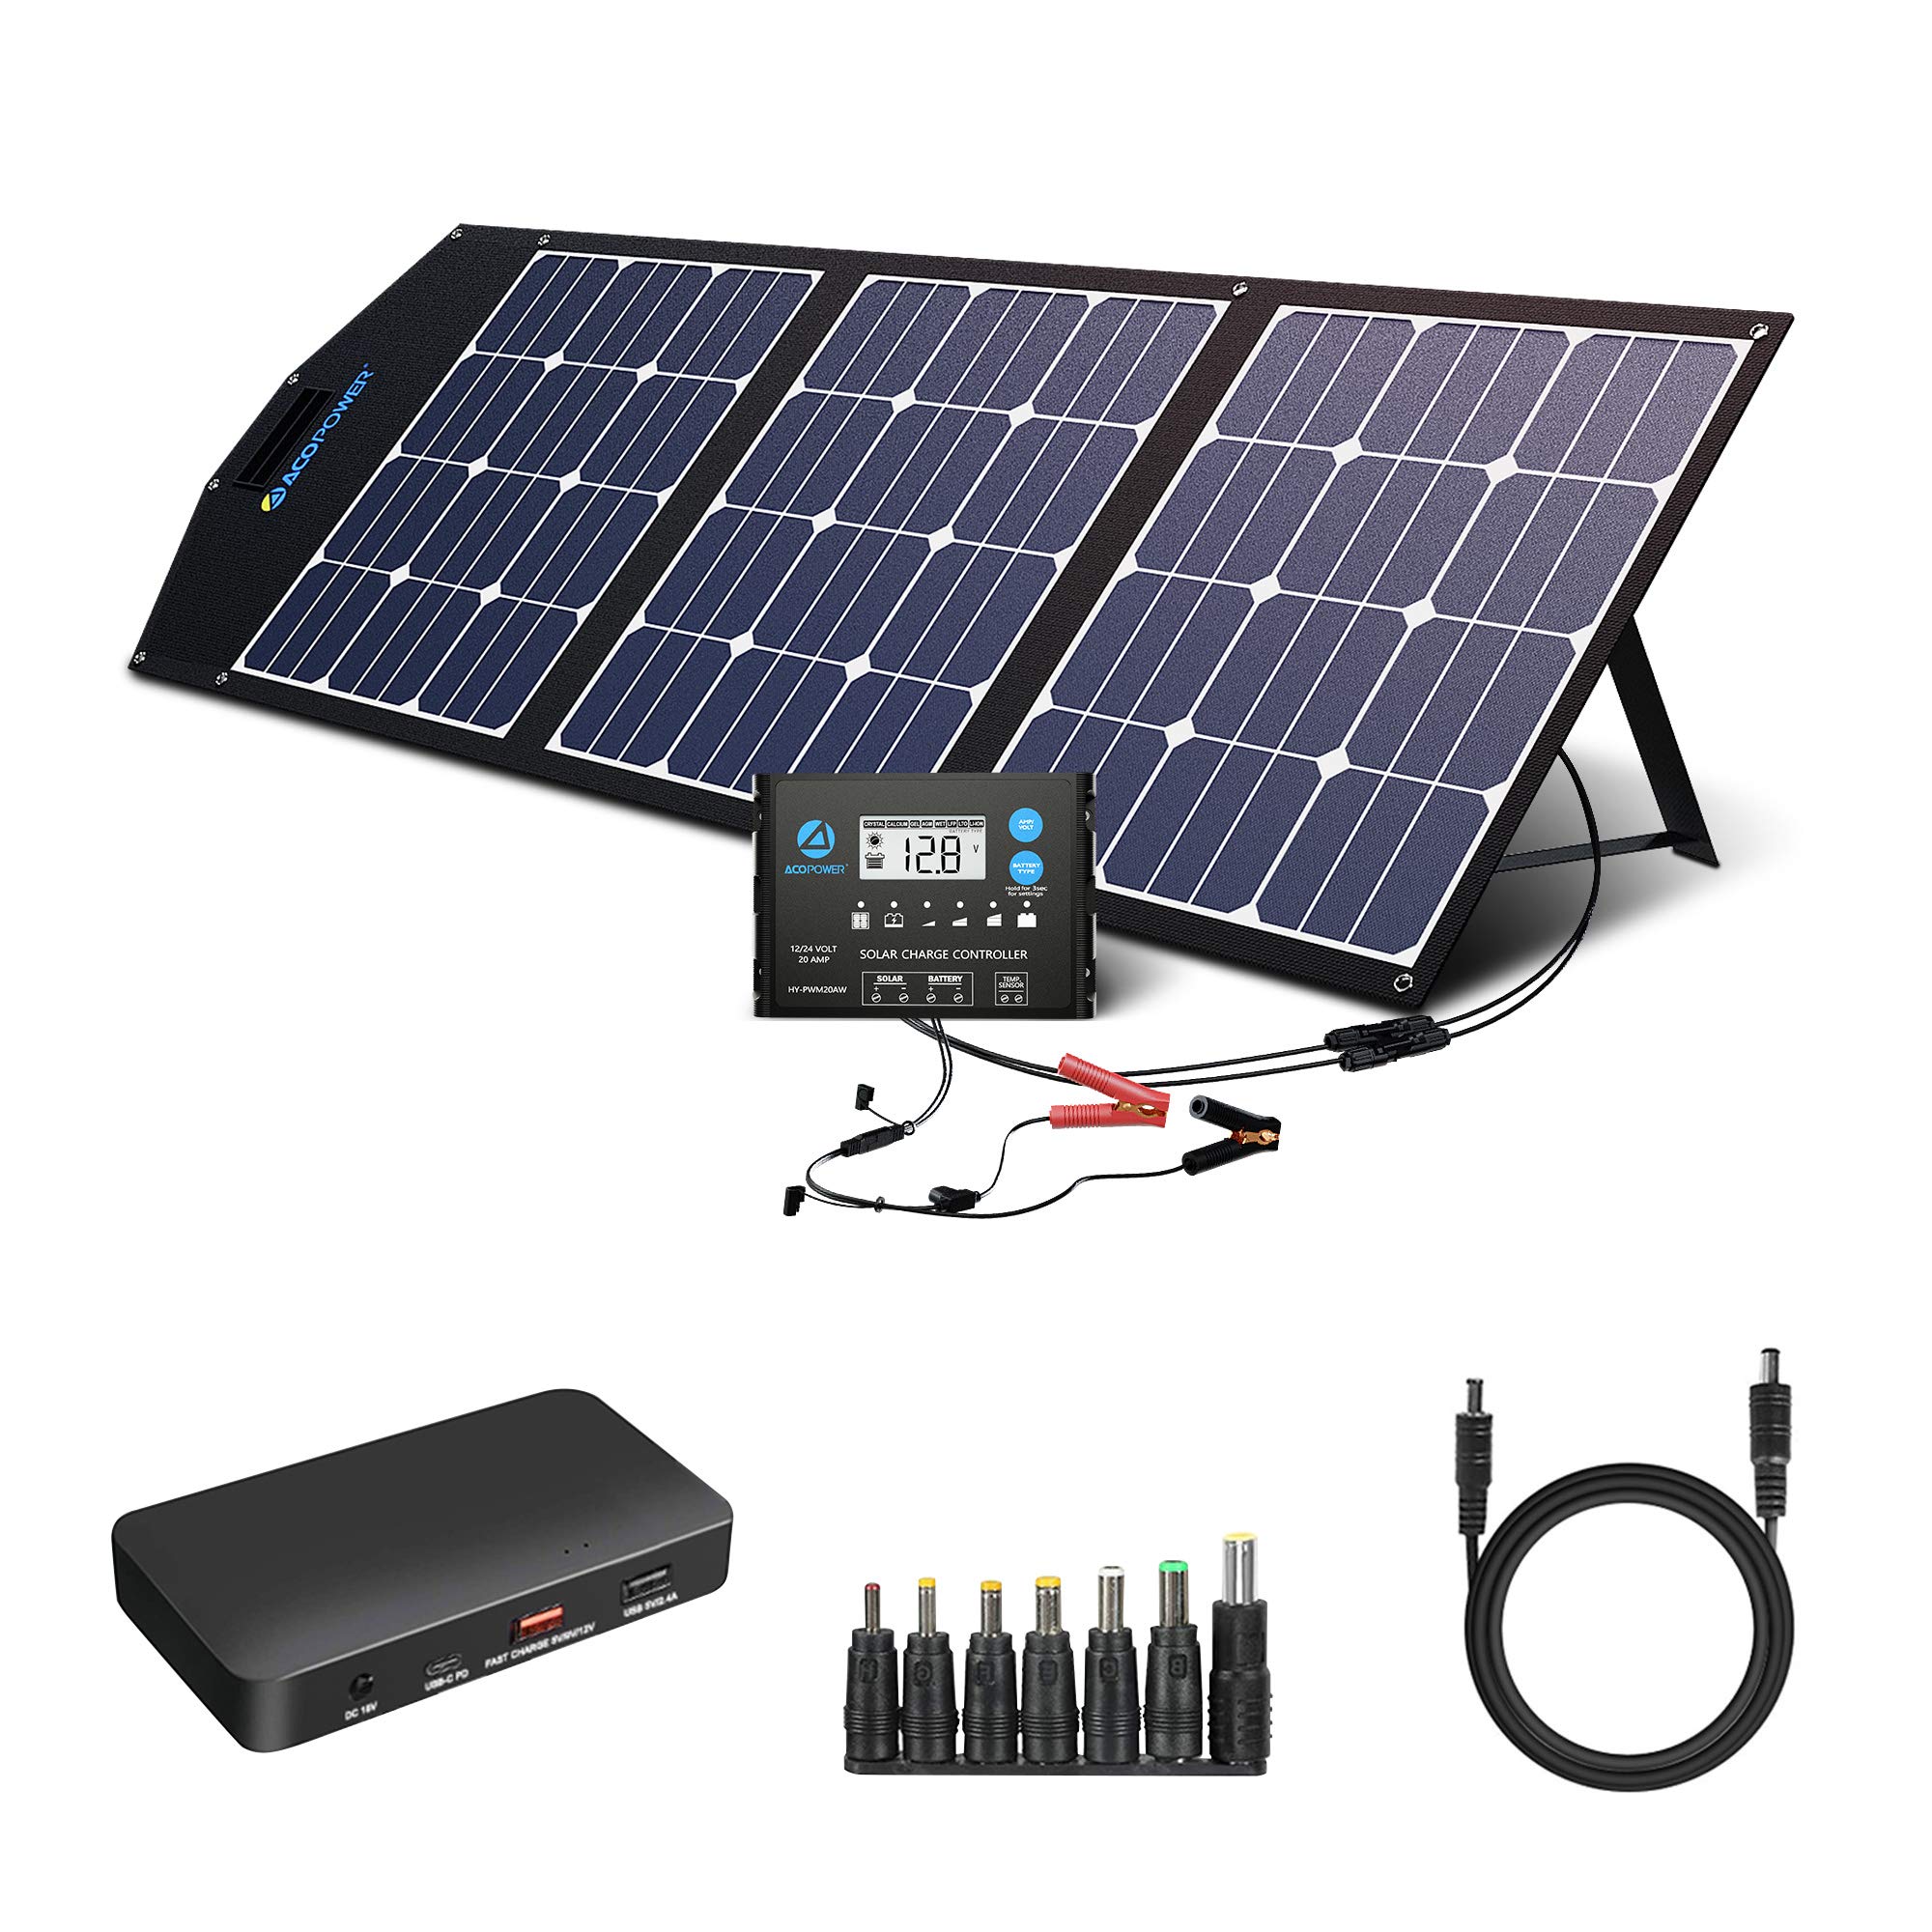 ACOPOWER 120w 12v Portable Solar Panel